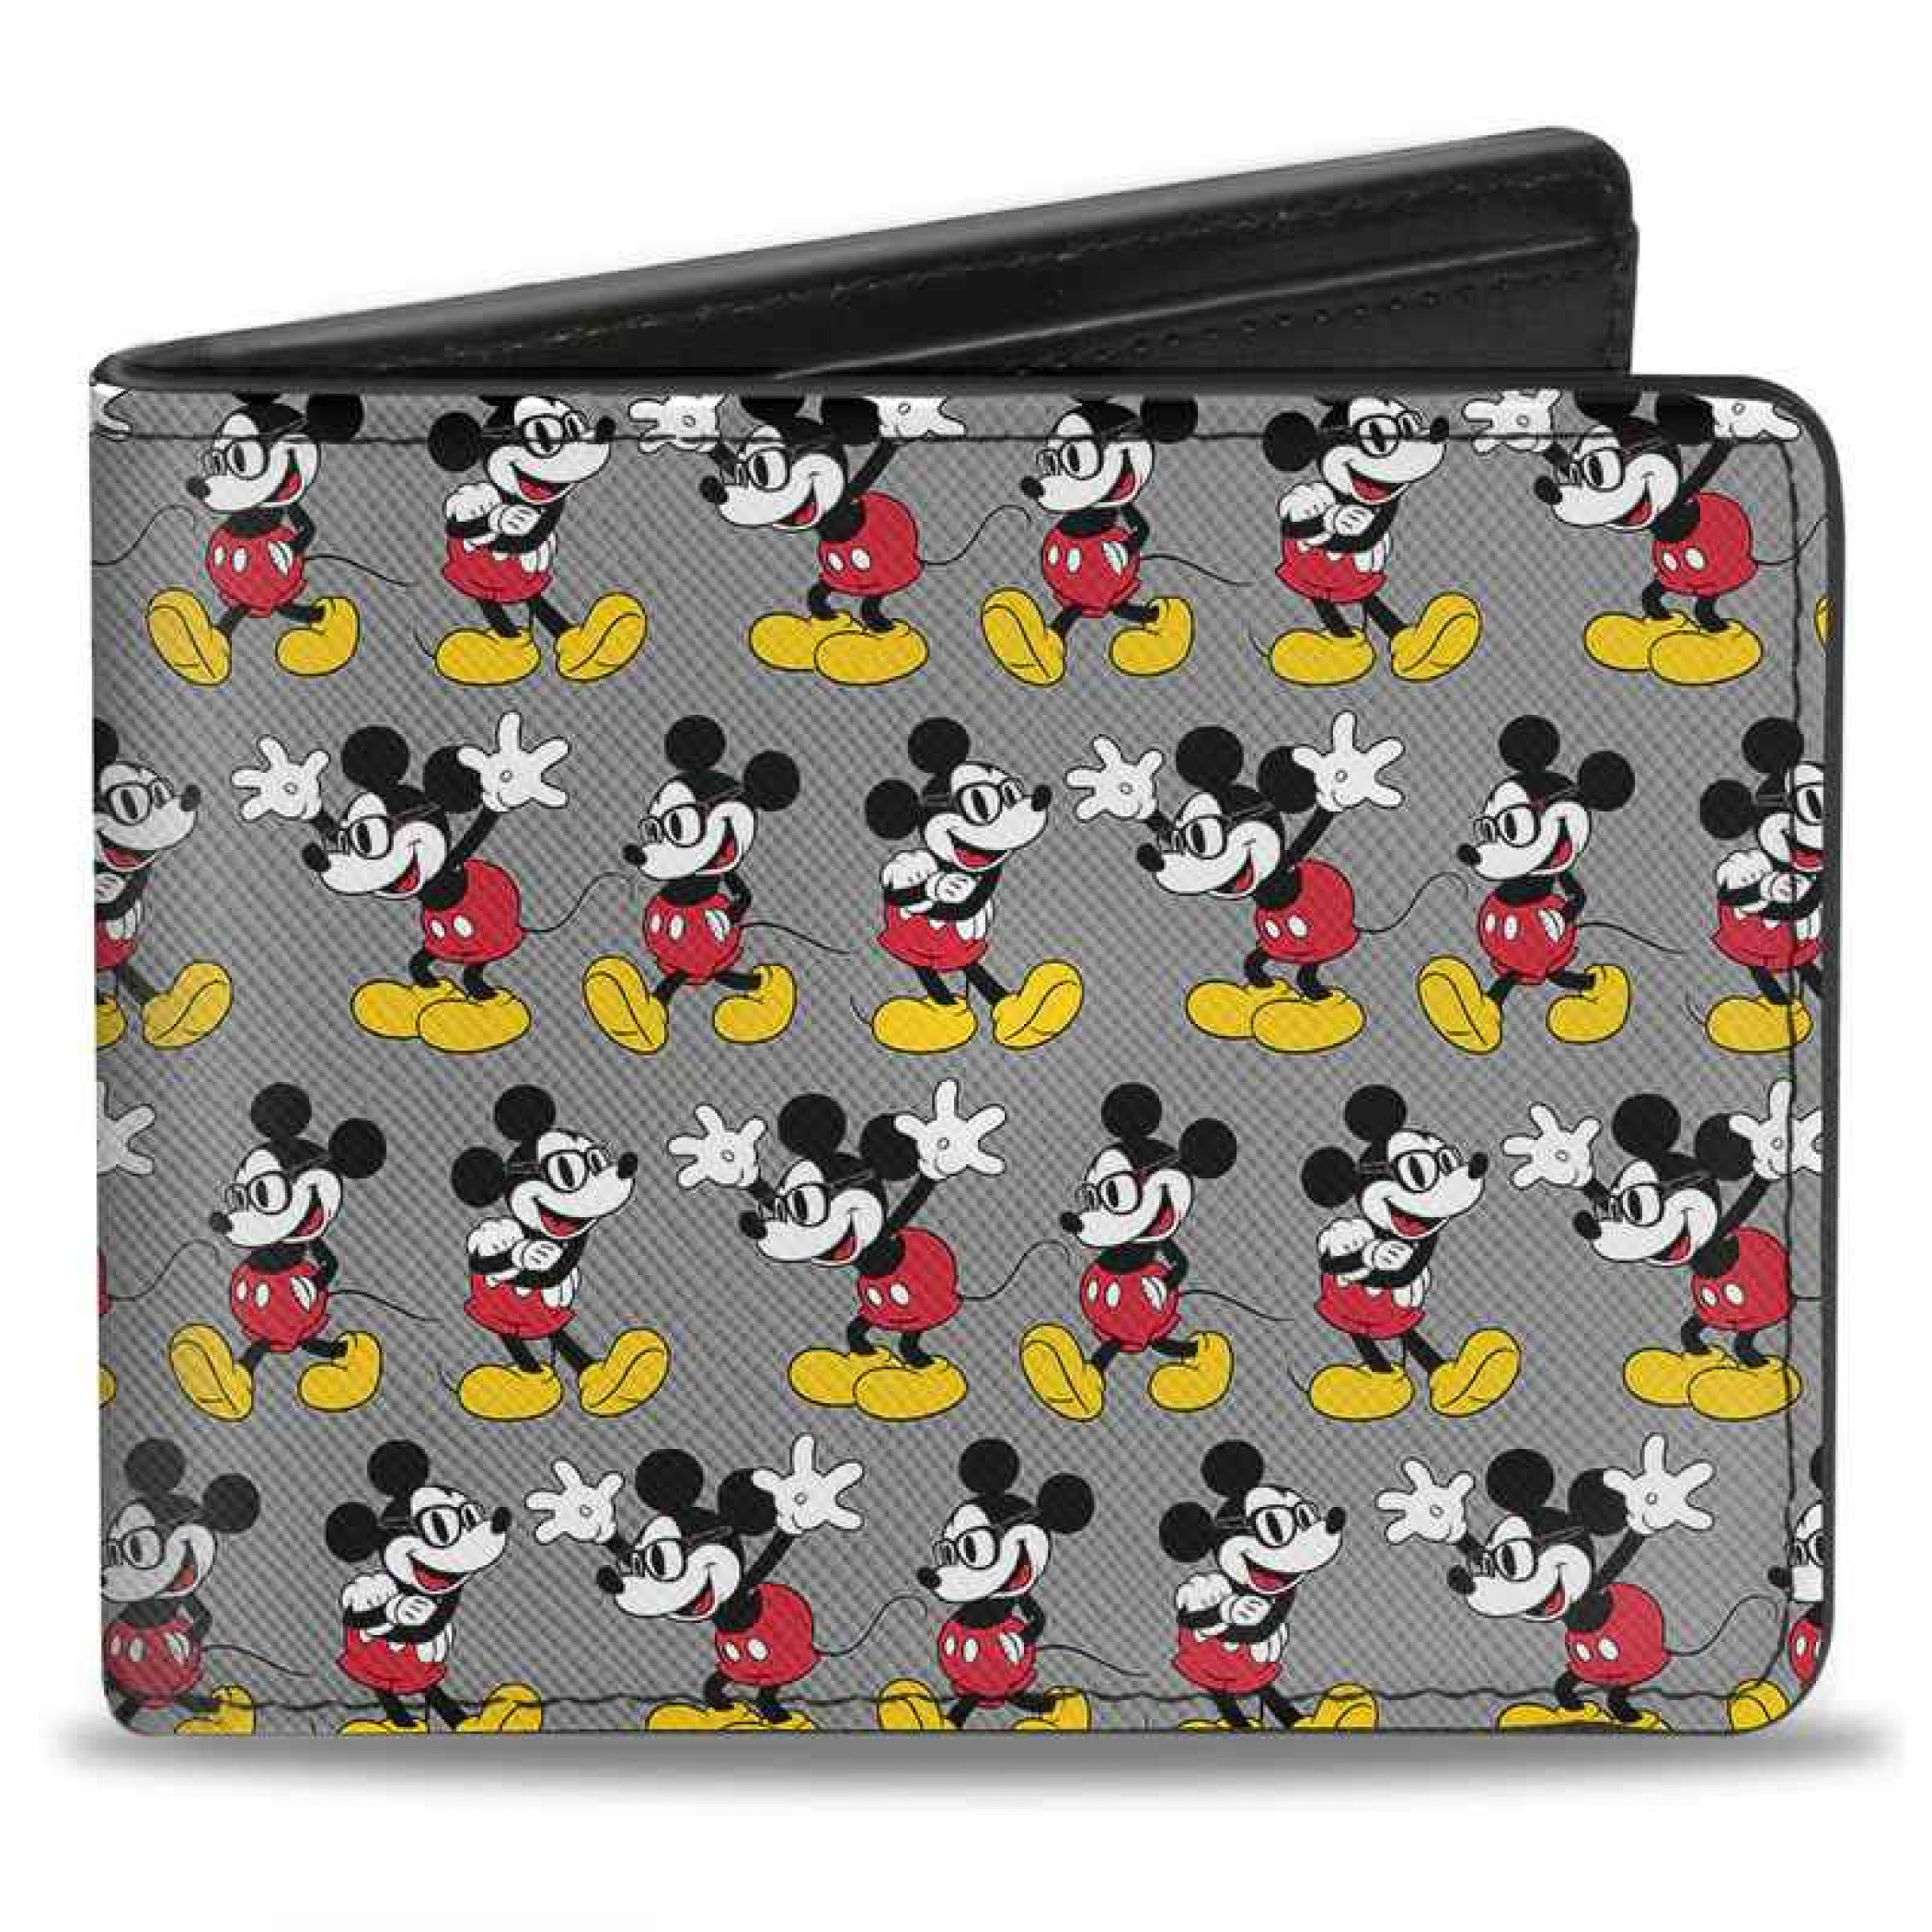 Mickey Mouse Nerdy Bi Fold Wallet